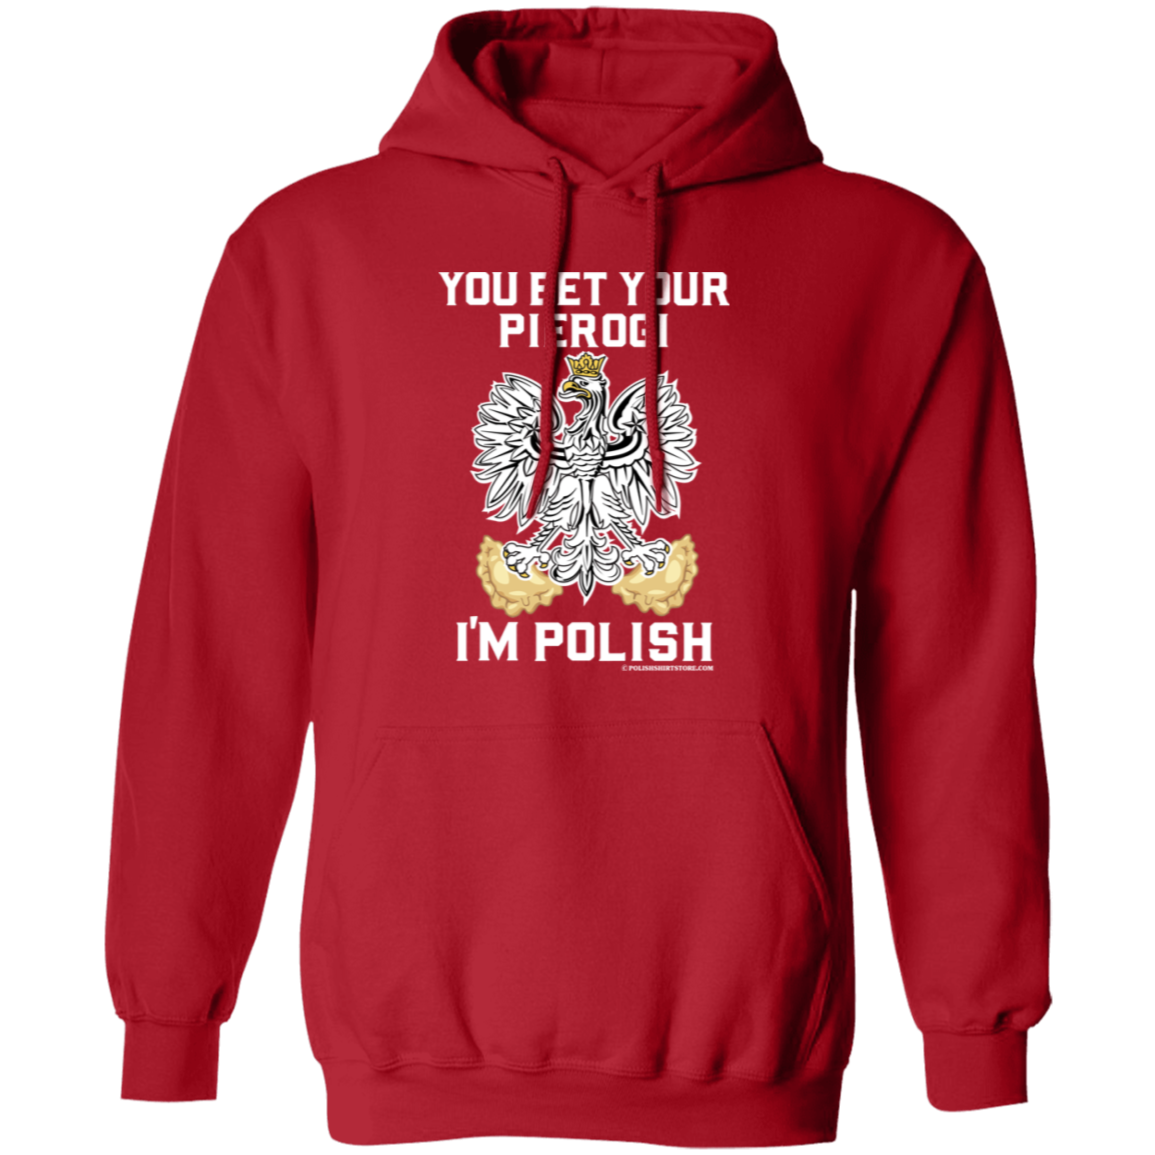 You Bet Your Pierogi I'm Polish Apparel CustomCat G185 Pullover Hoodie Red S